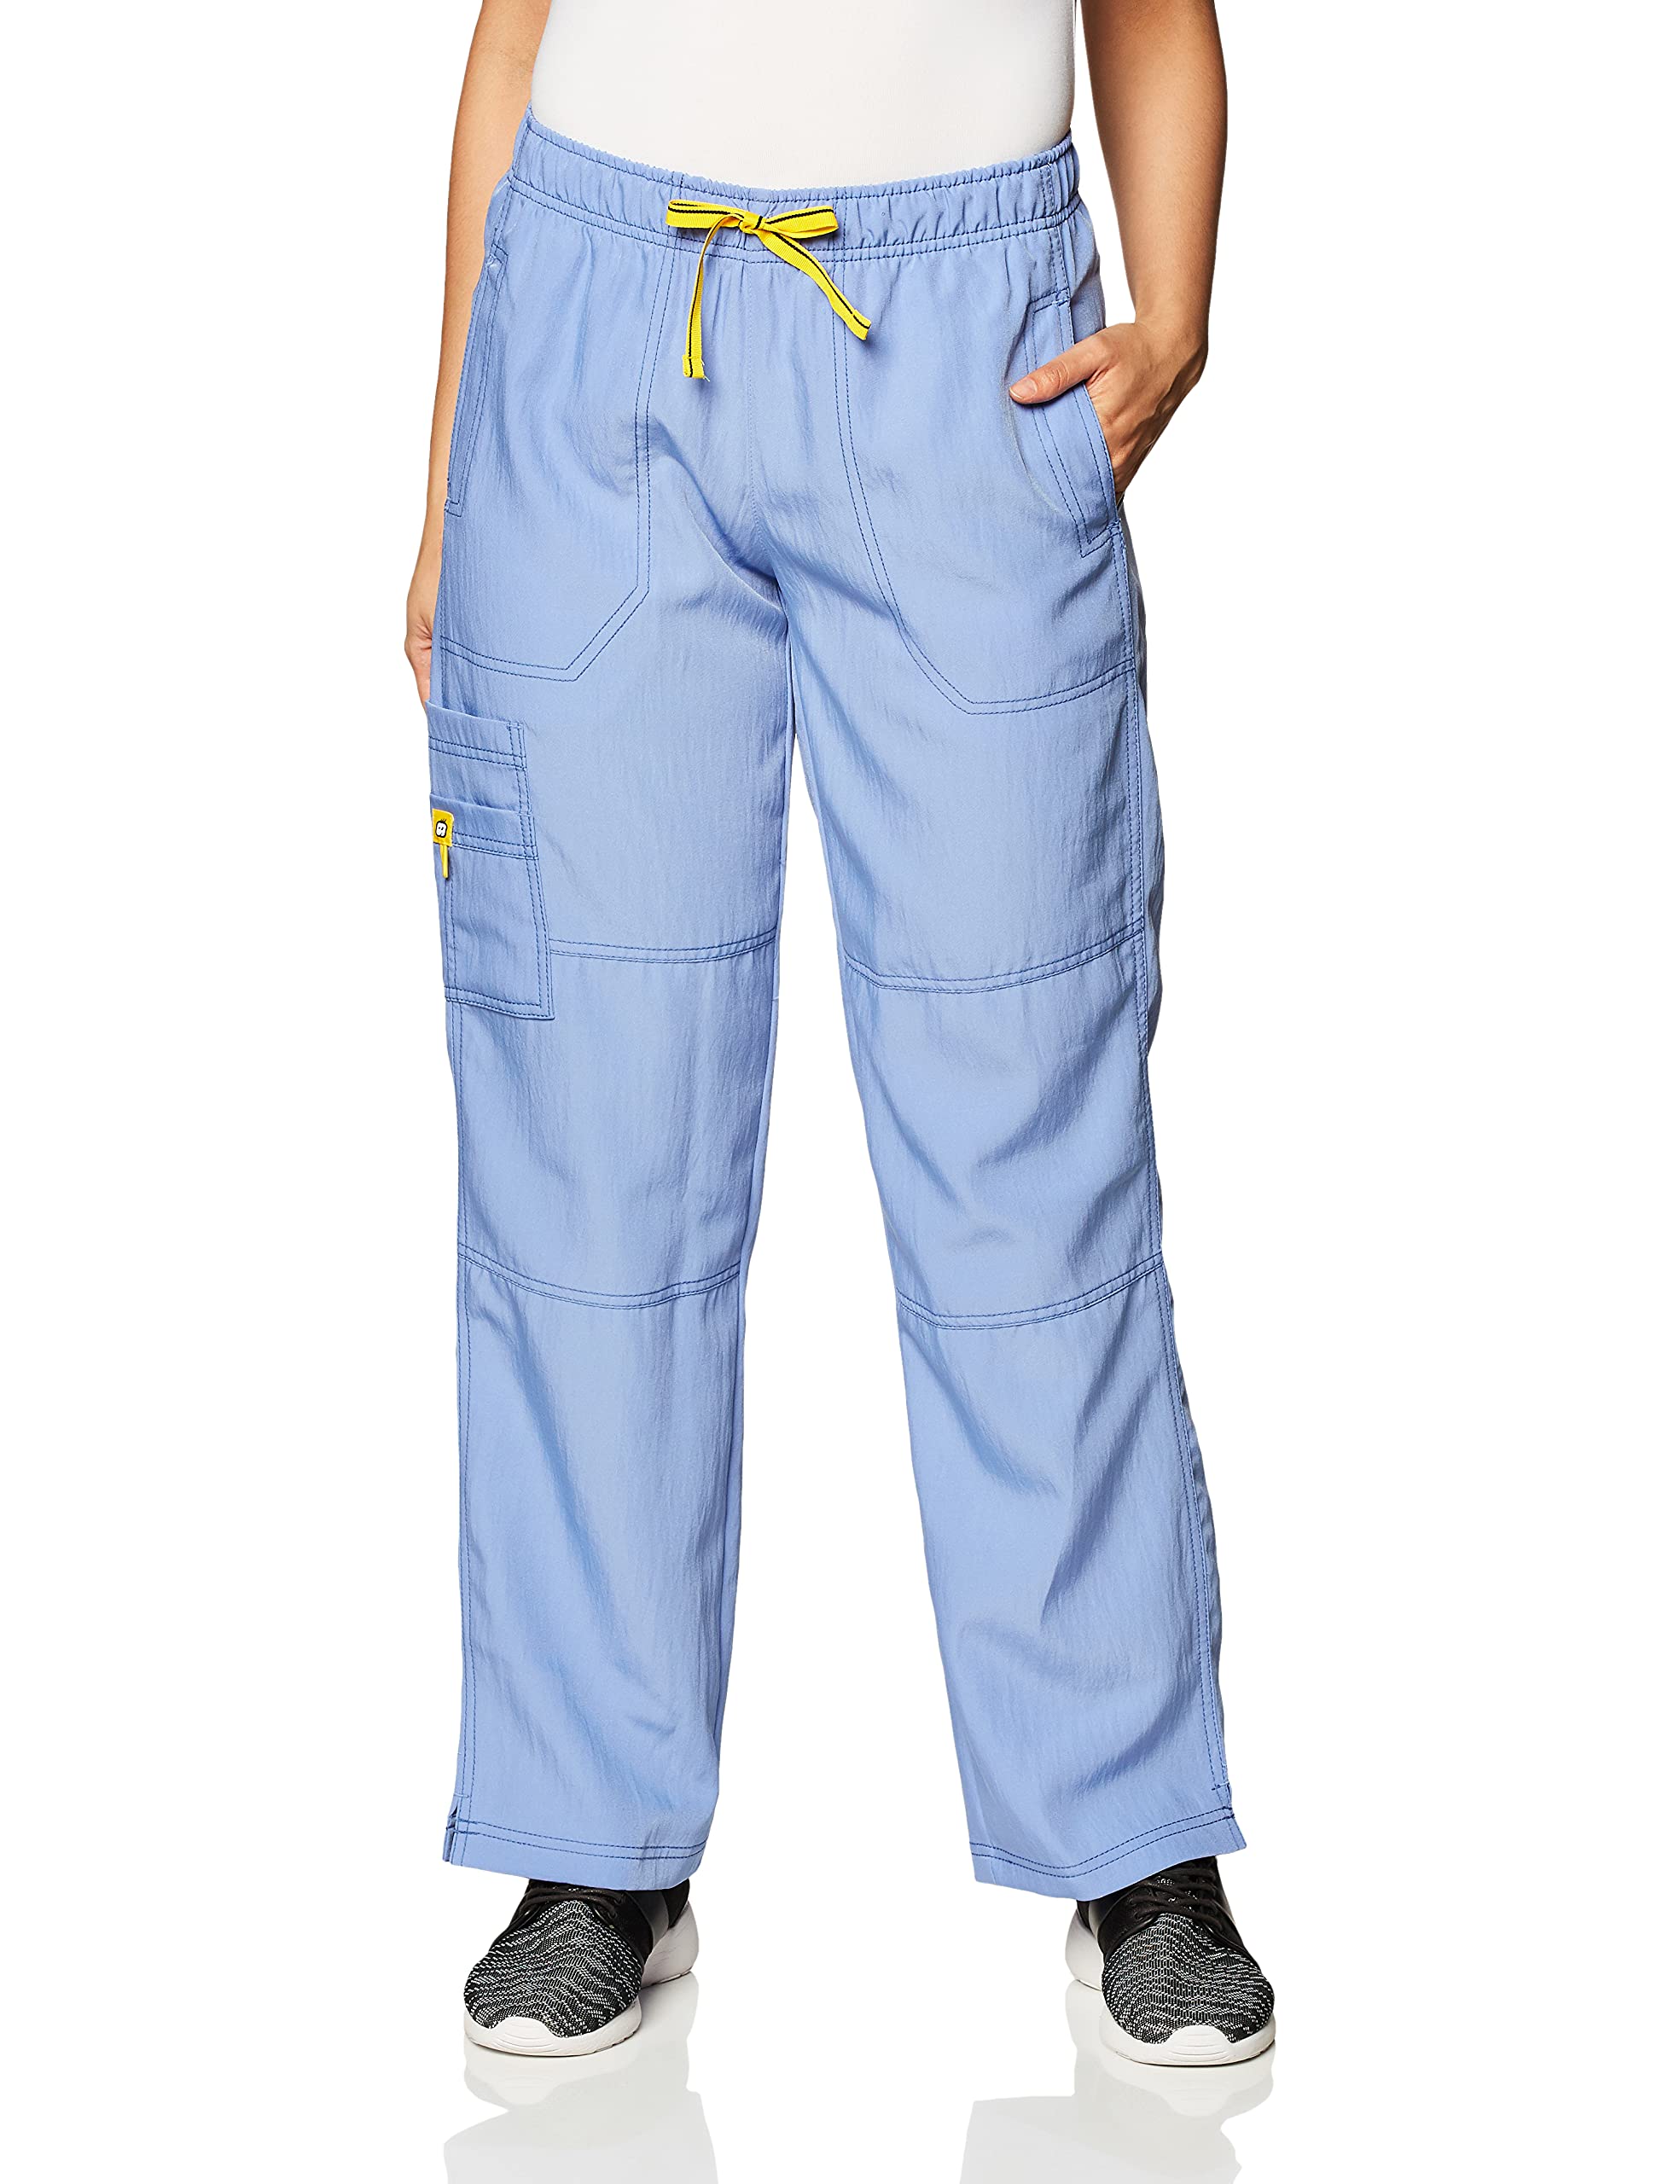 Wonderwink Womens Four Stretch Womens Cargo Medical Scrubs Pants, Ceil Blue, Large Tall Us